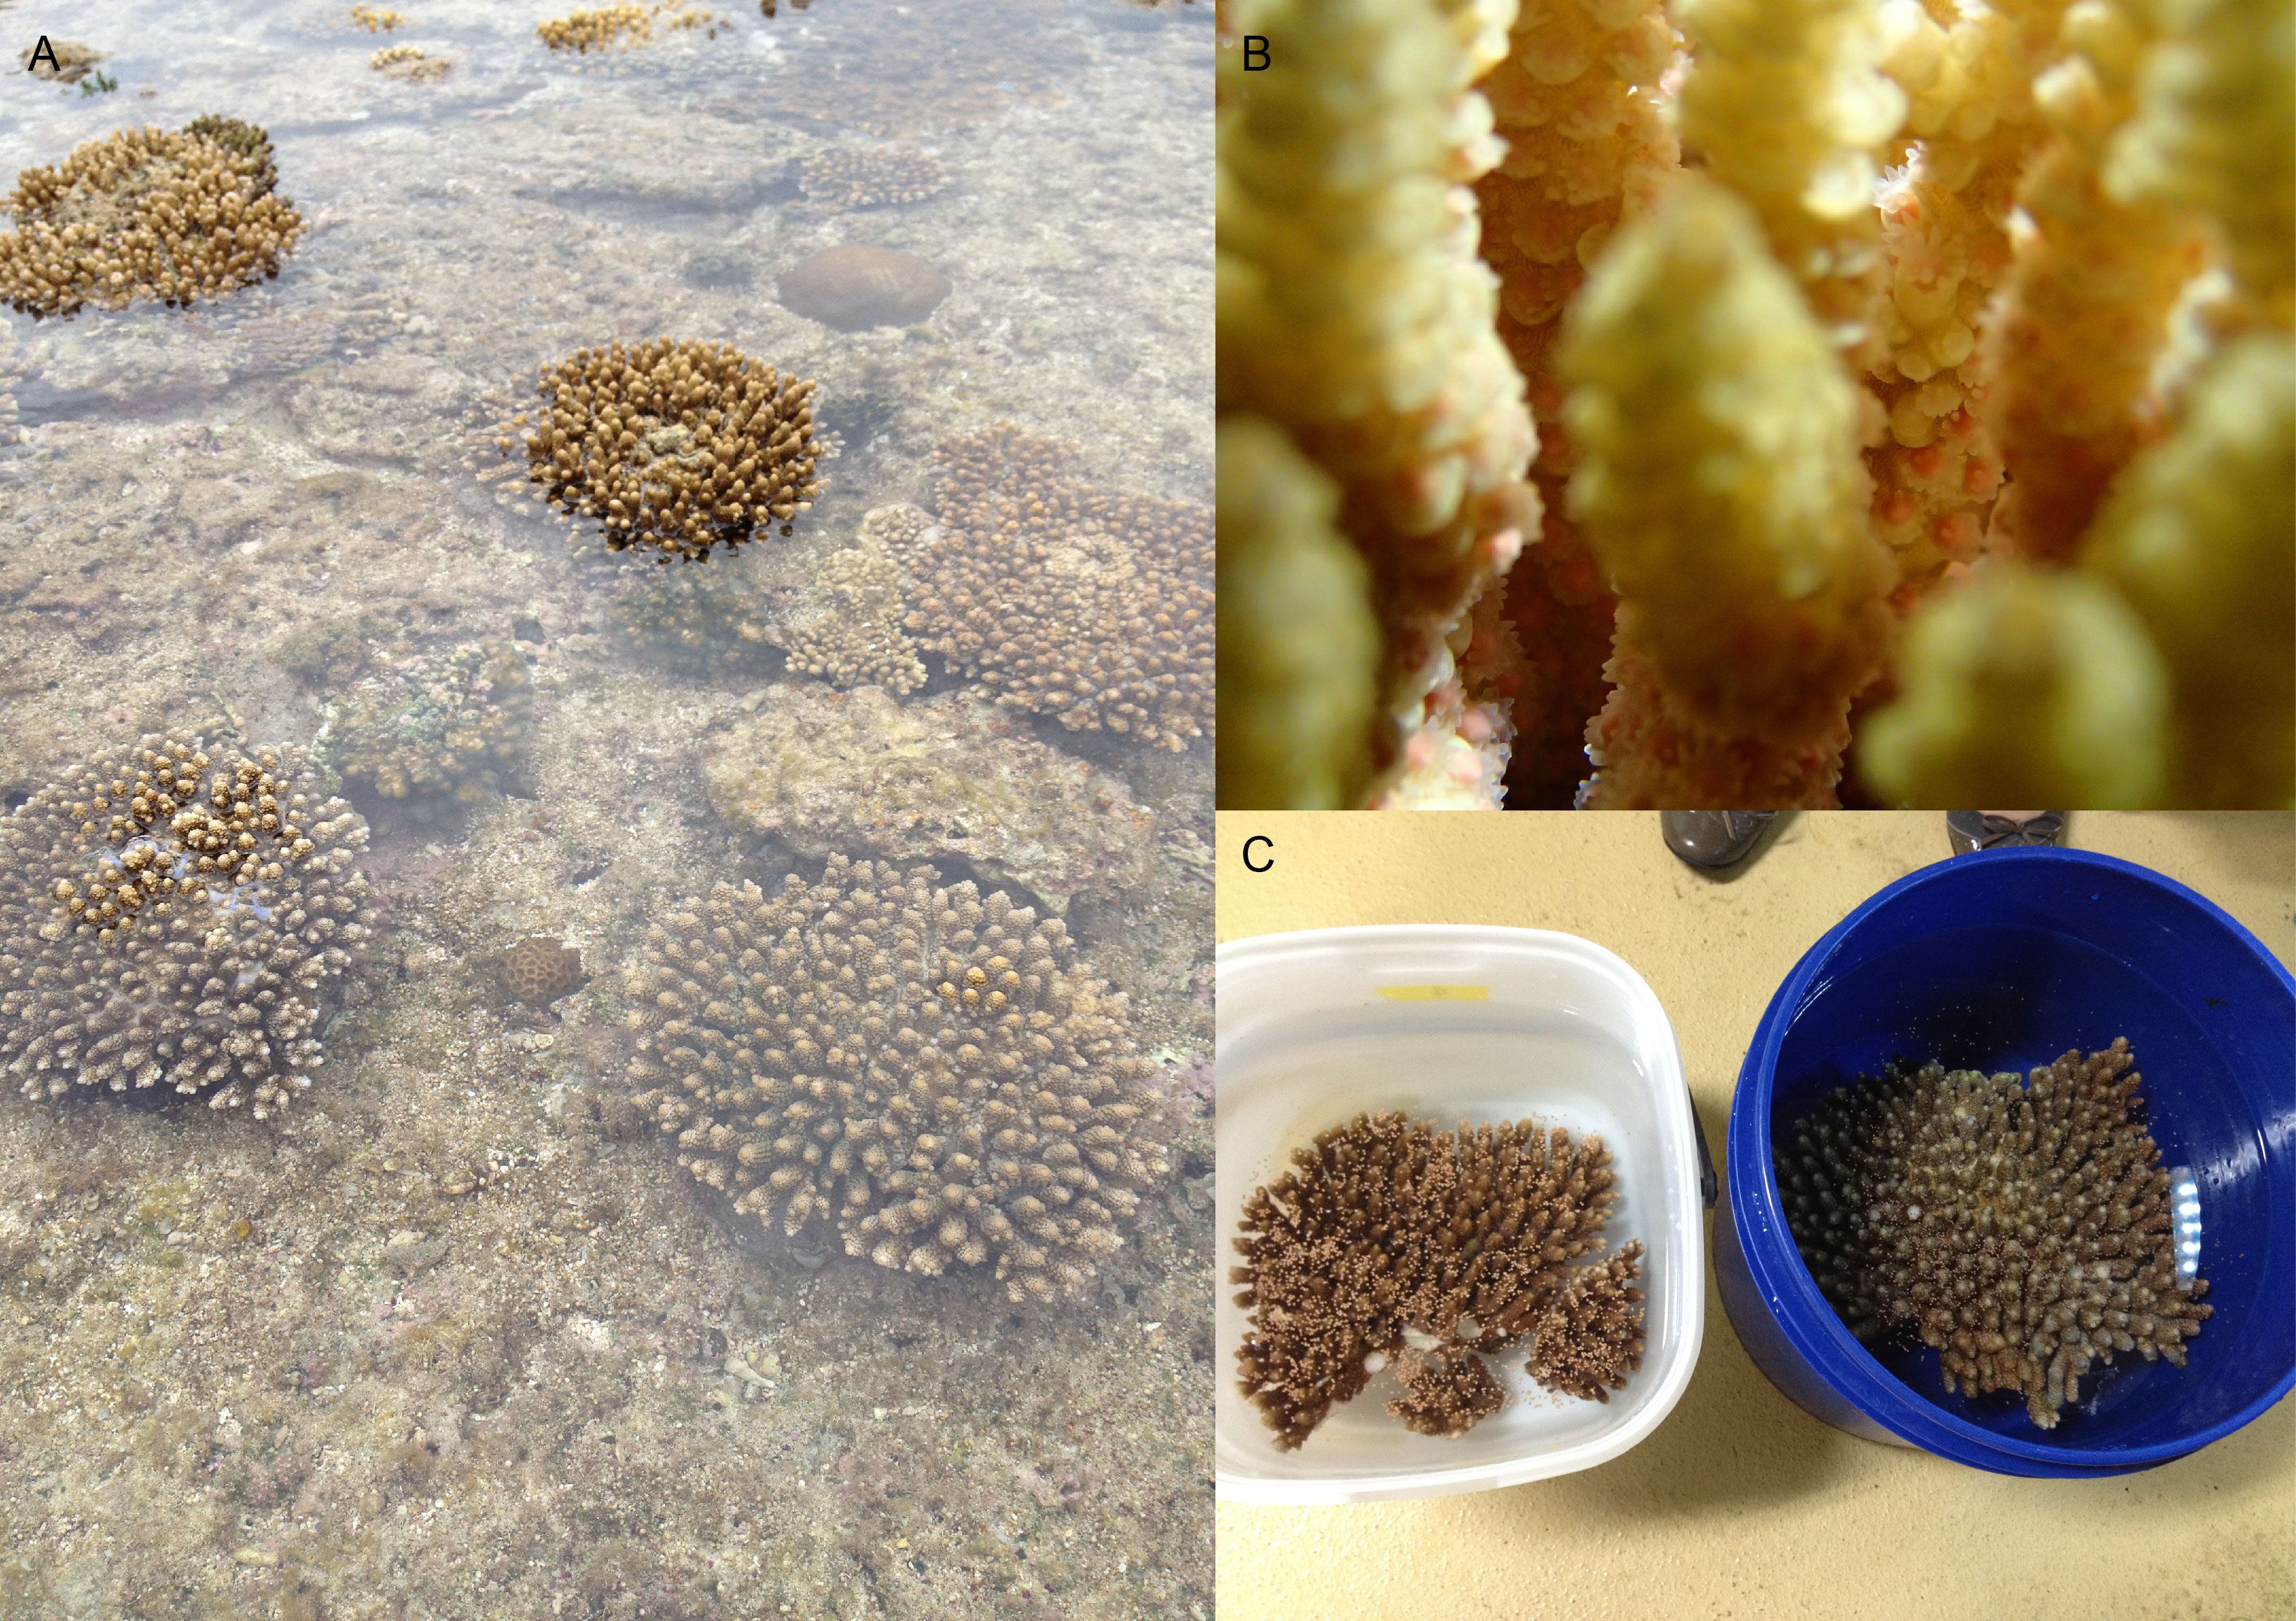 (A) Acropora digitifera colonies in shallow water at Onna-son, Okinawa, Japan. (B) “Bundle setting” of Acropora tenuis (Photo: Yuna Zayasu). (C) Acropora digitifera colonies that are spawning.